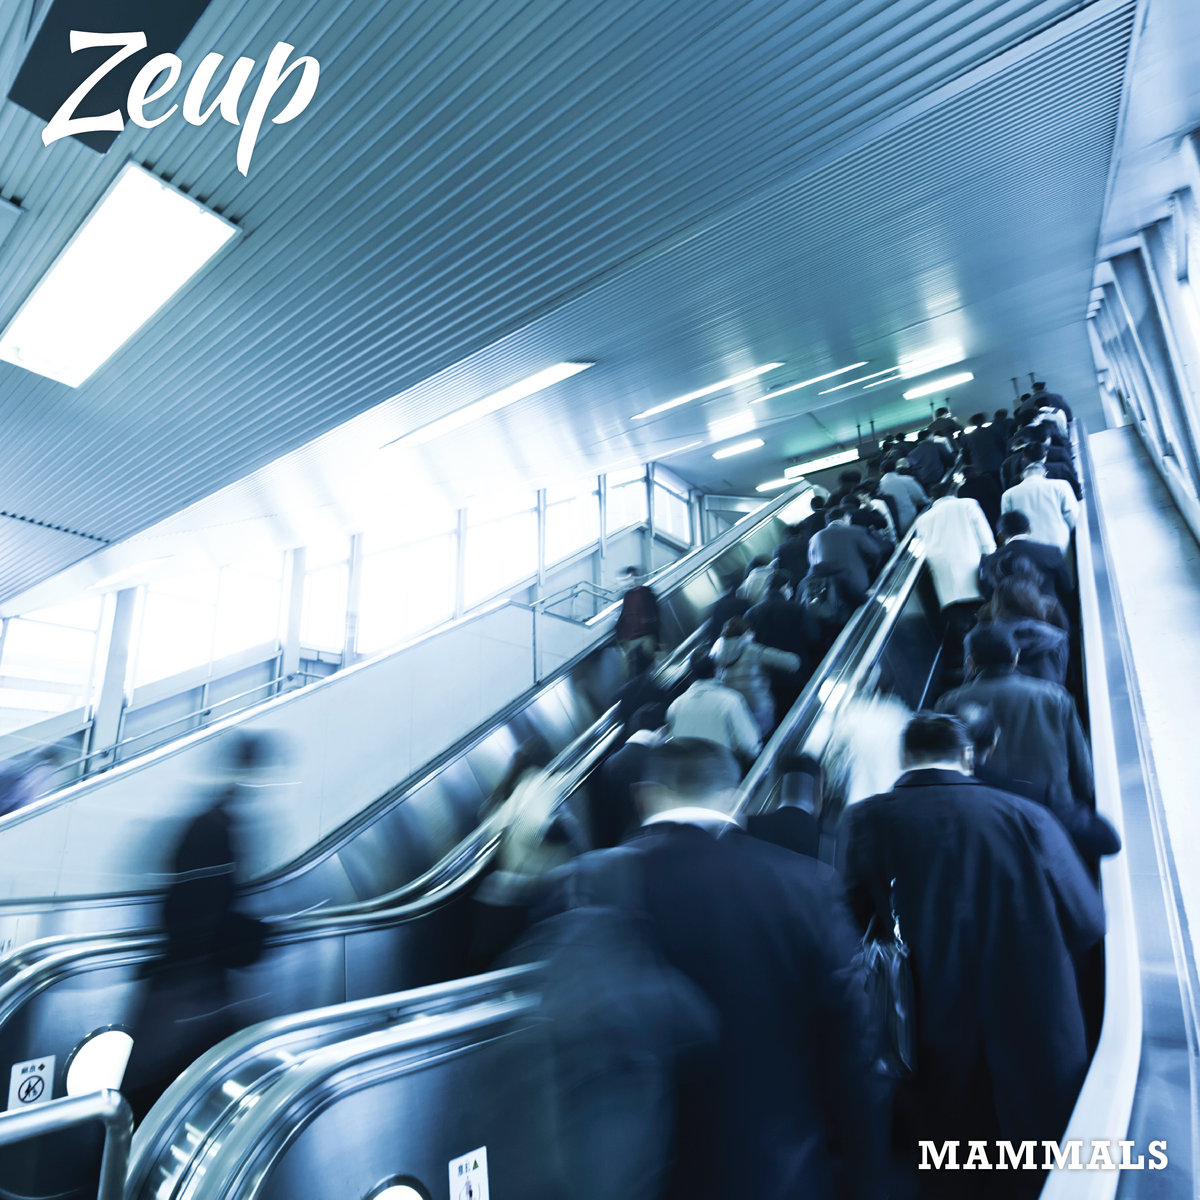 Zeup - Mammals - LP